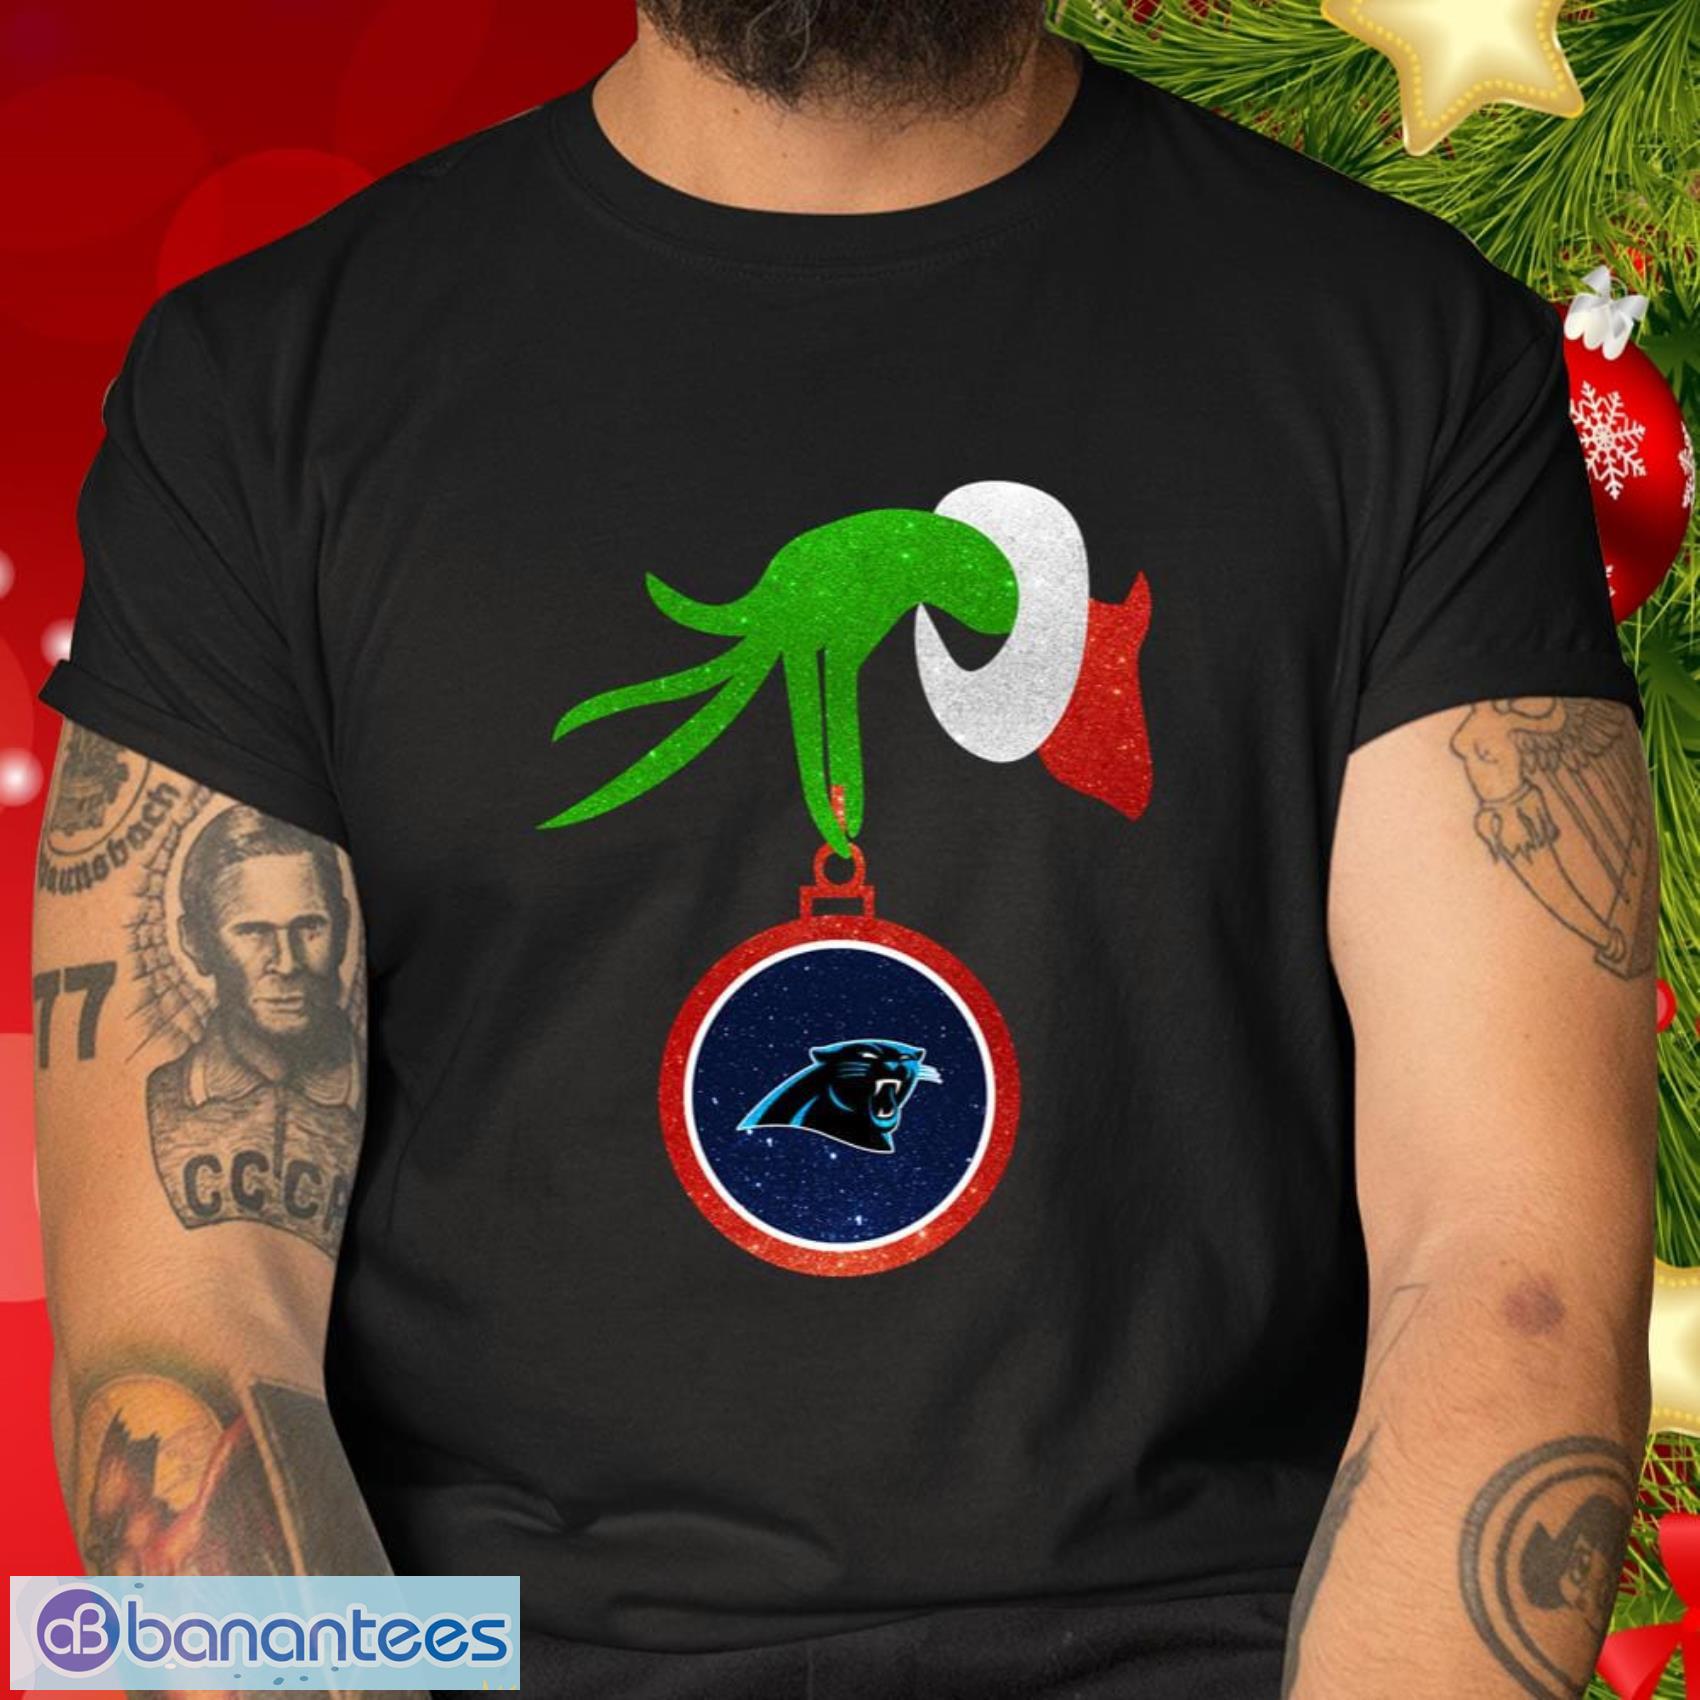 Carolina Panthers Grinch Merry Christmas NFL Football Gift Fr Fans T Shirt - Carolina Panthers Grinch Merry Christmas NFL Football T Shirt_2